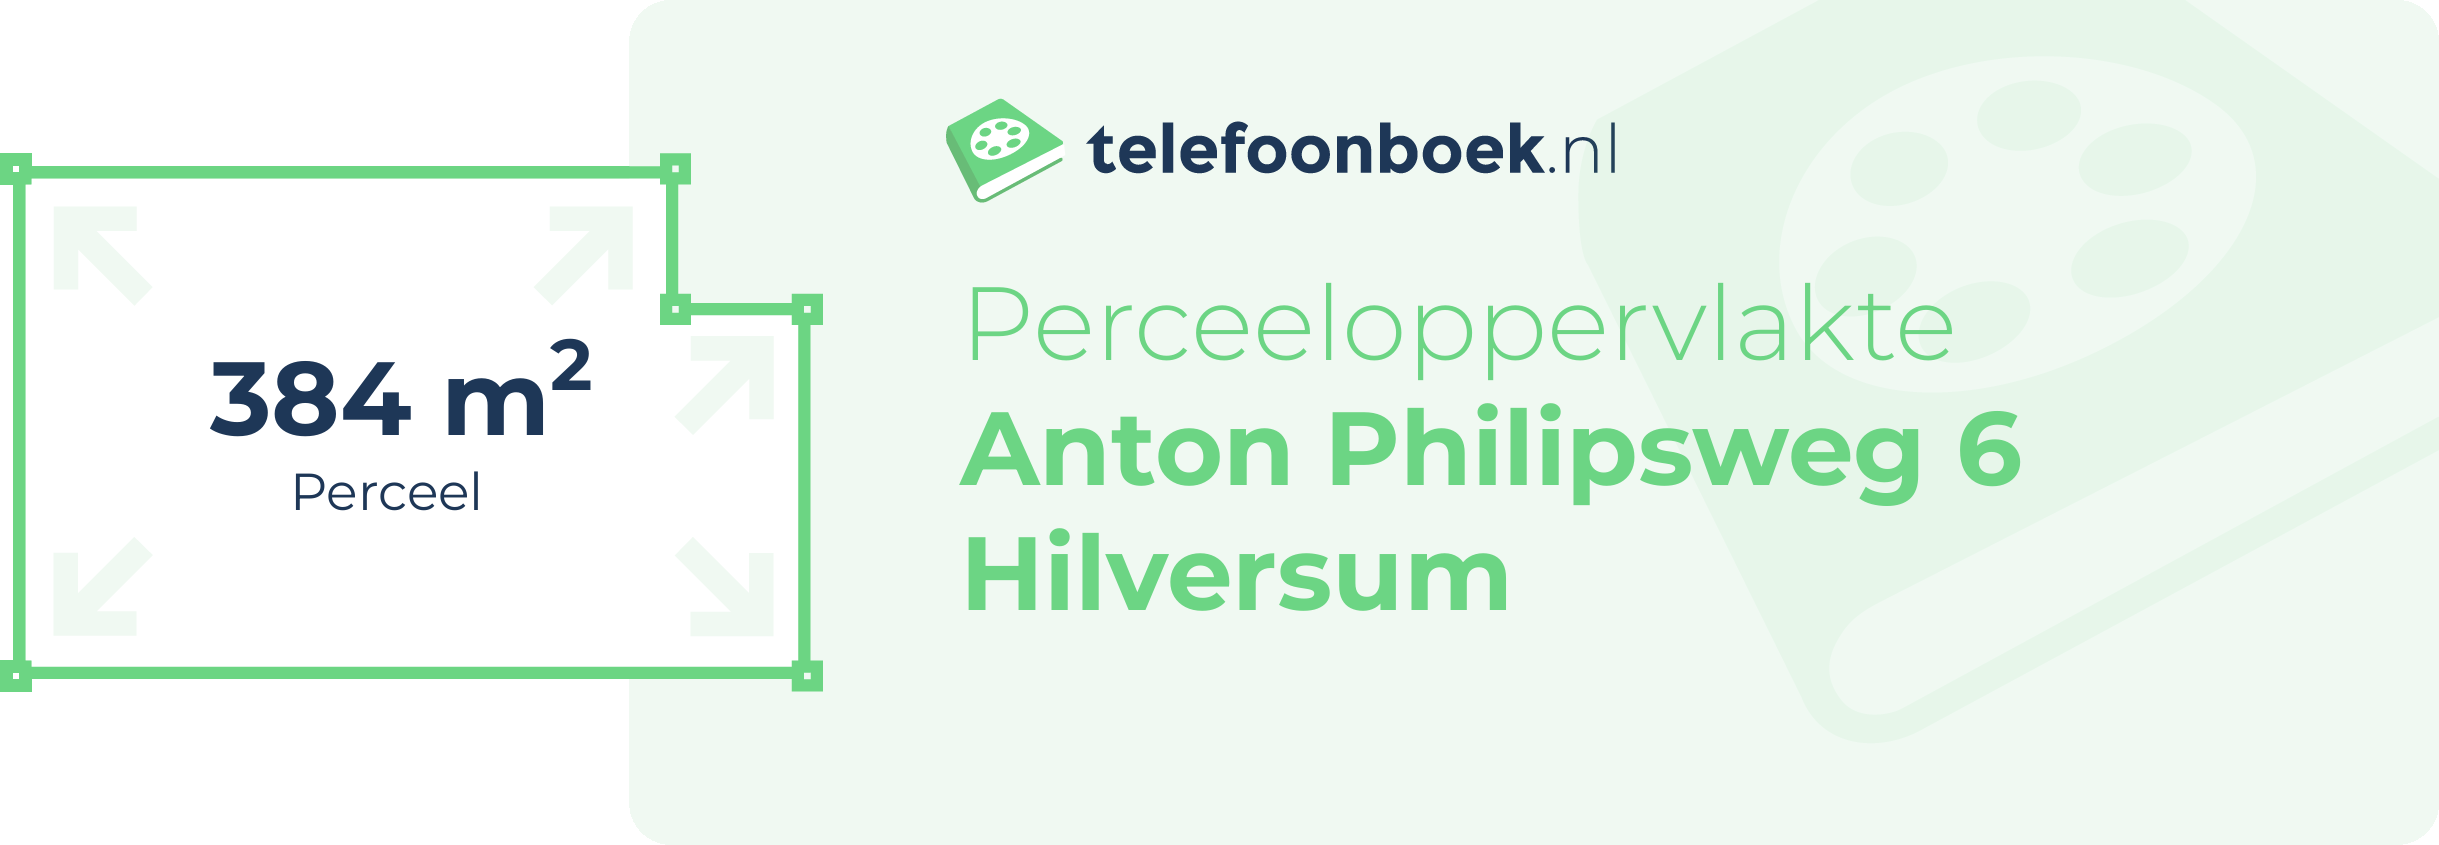 Perceeloppervlakte Anton Philipsweg 6 Hilversum